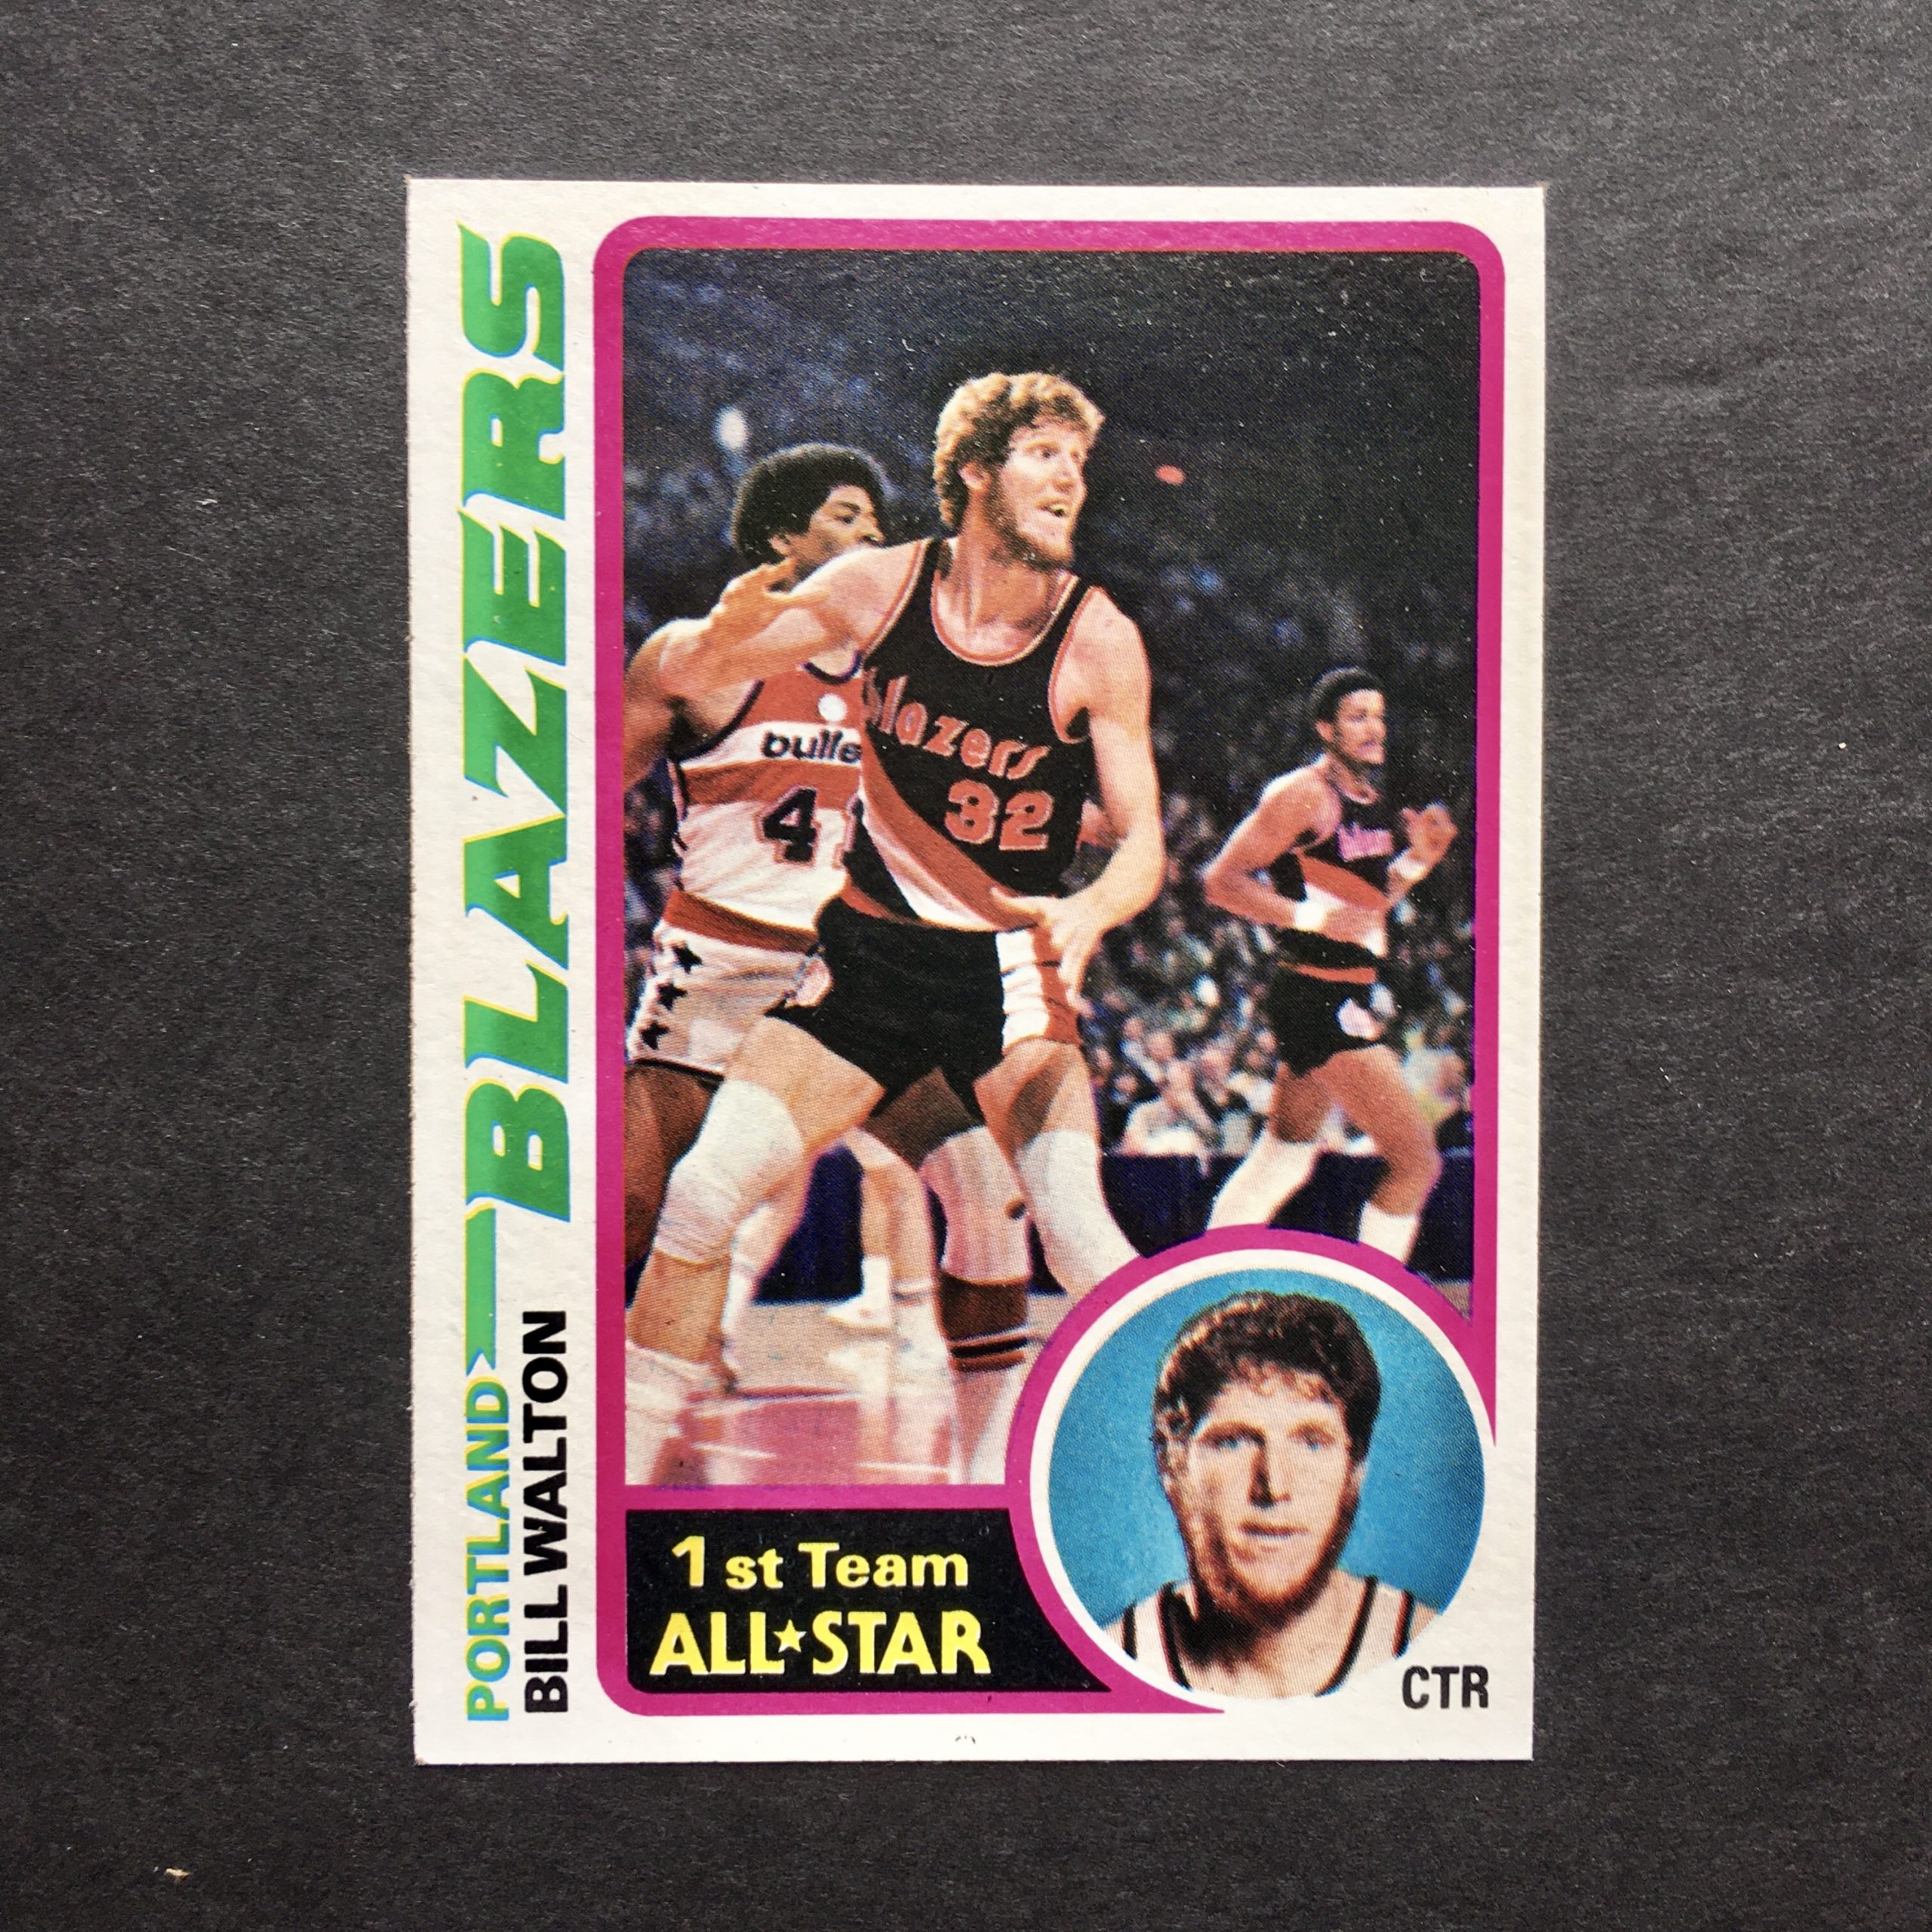 Bill Walton 1978-79 Topps Card